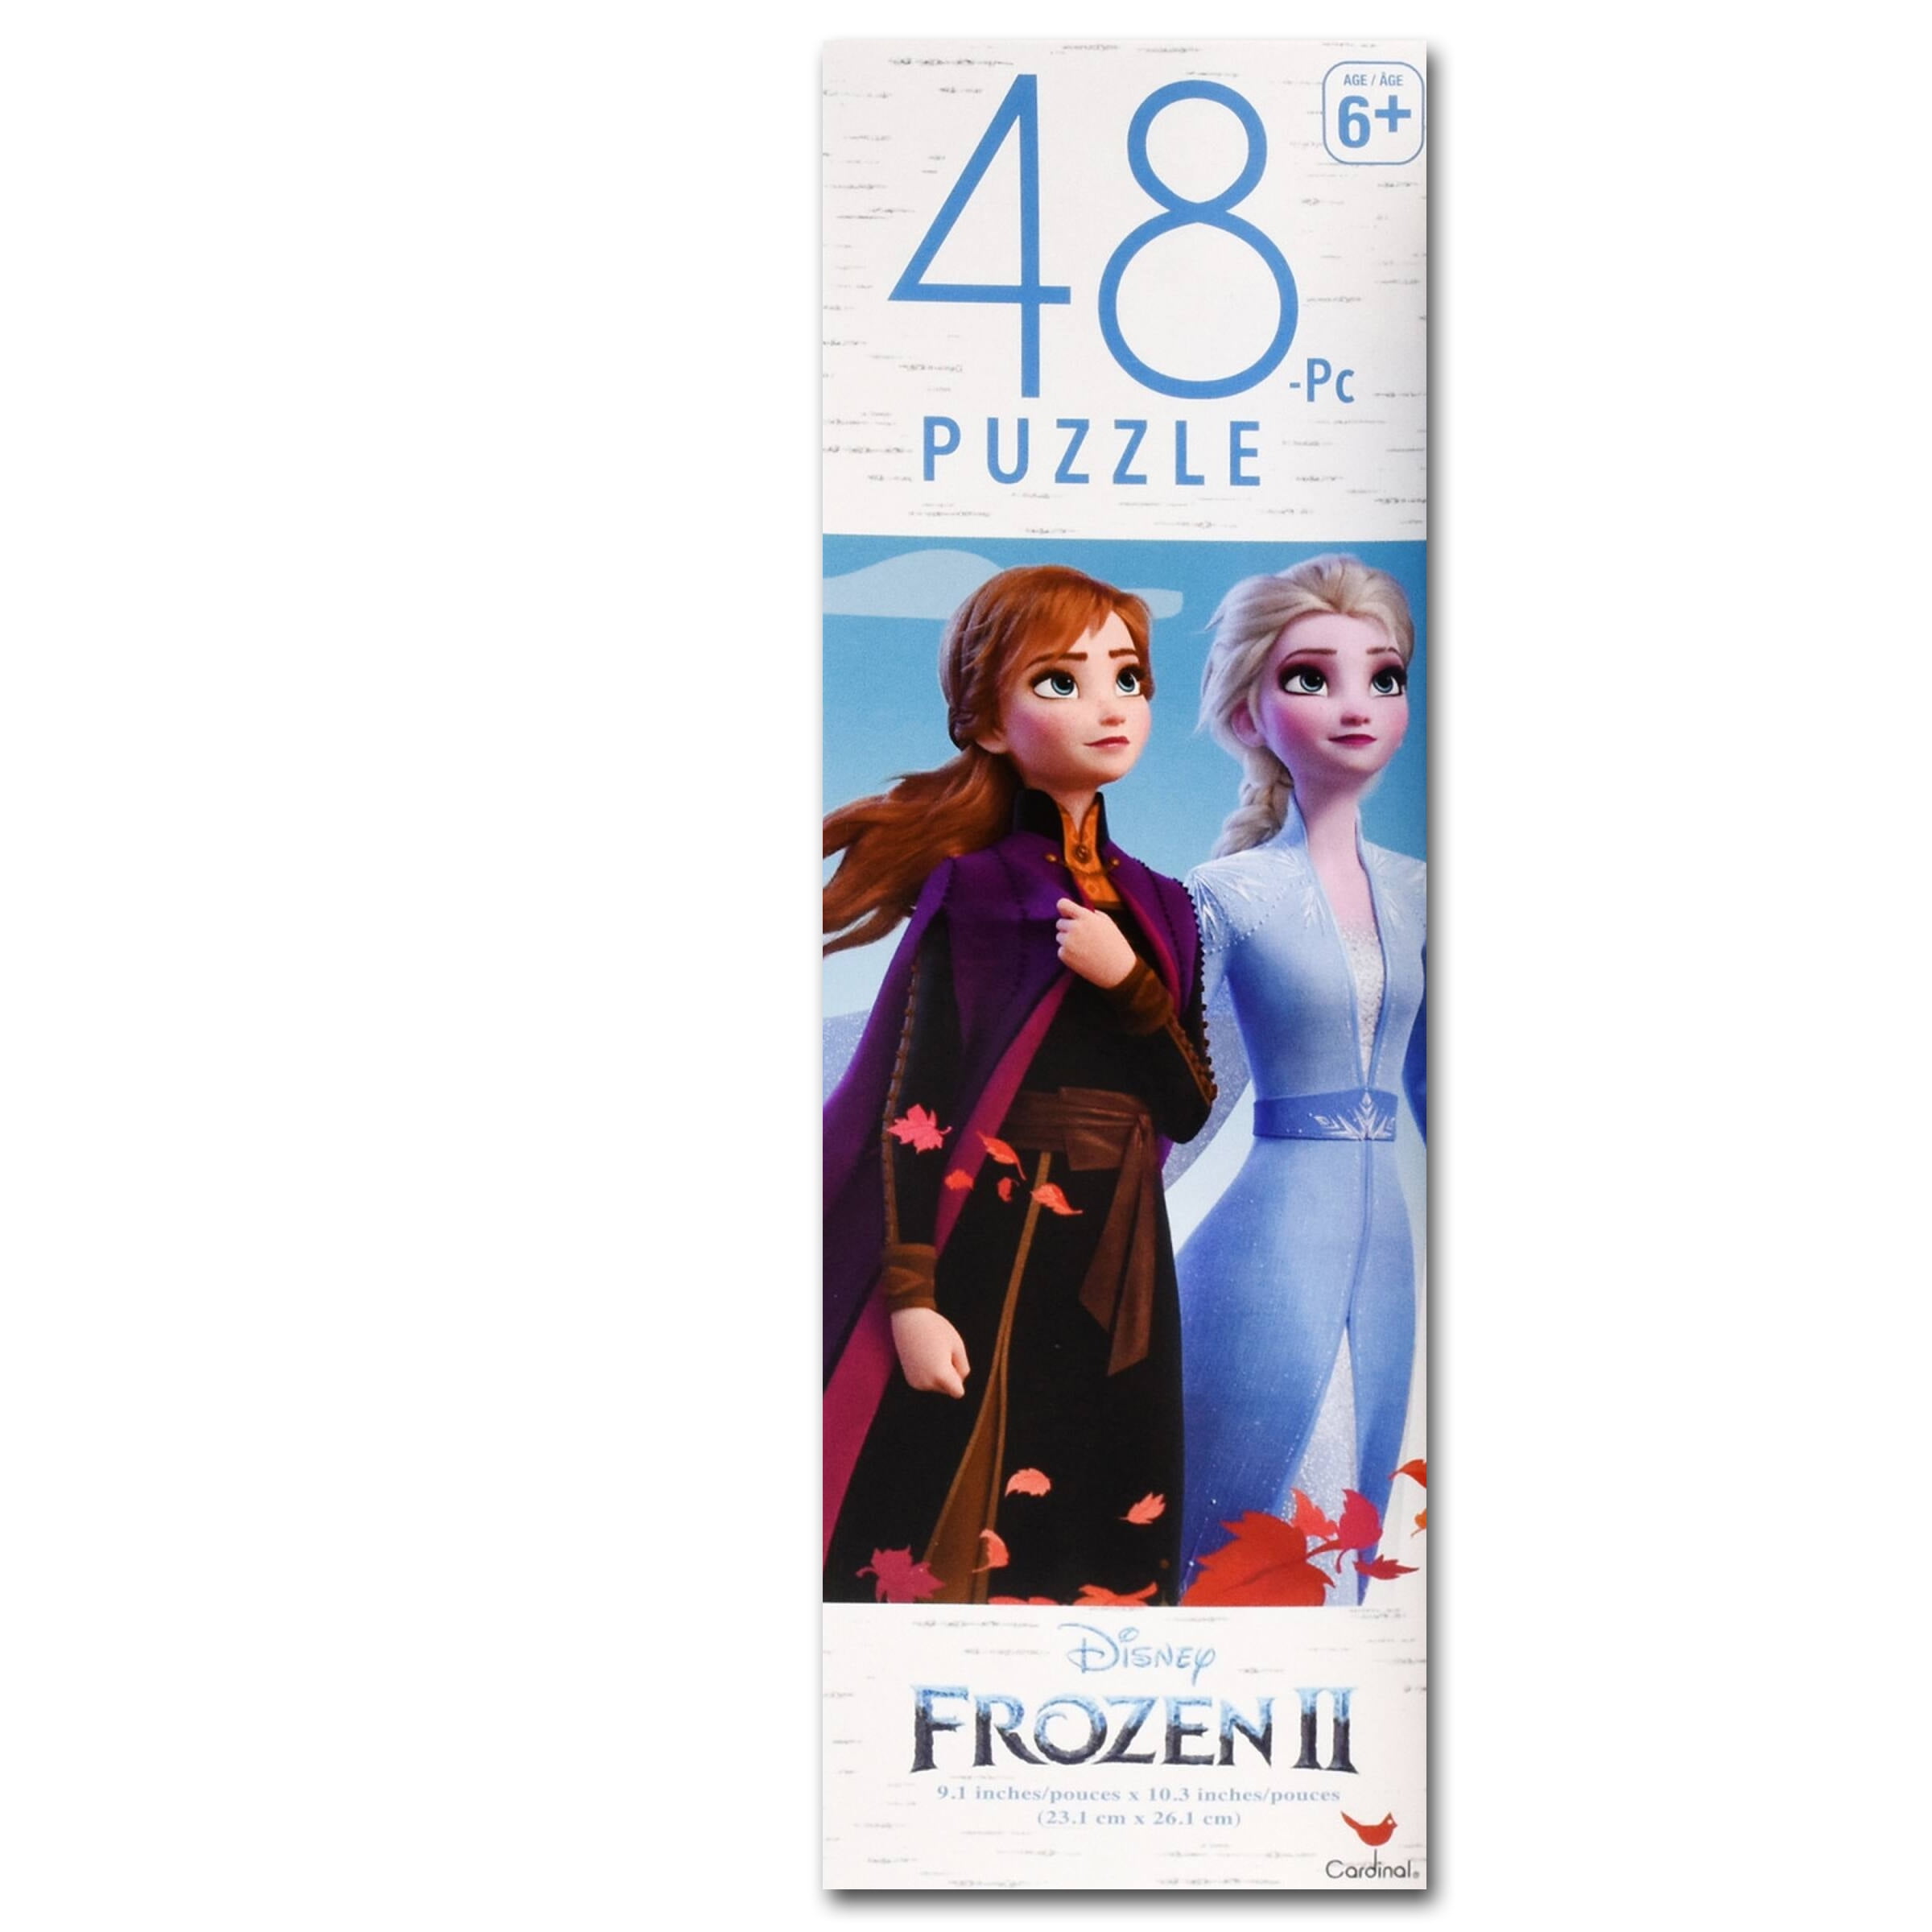 Disney Frozen 48pc Puzzle Featuring Elsa Anna & Olaf for sale online 